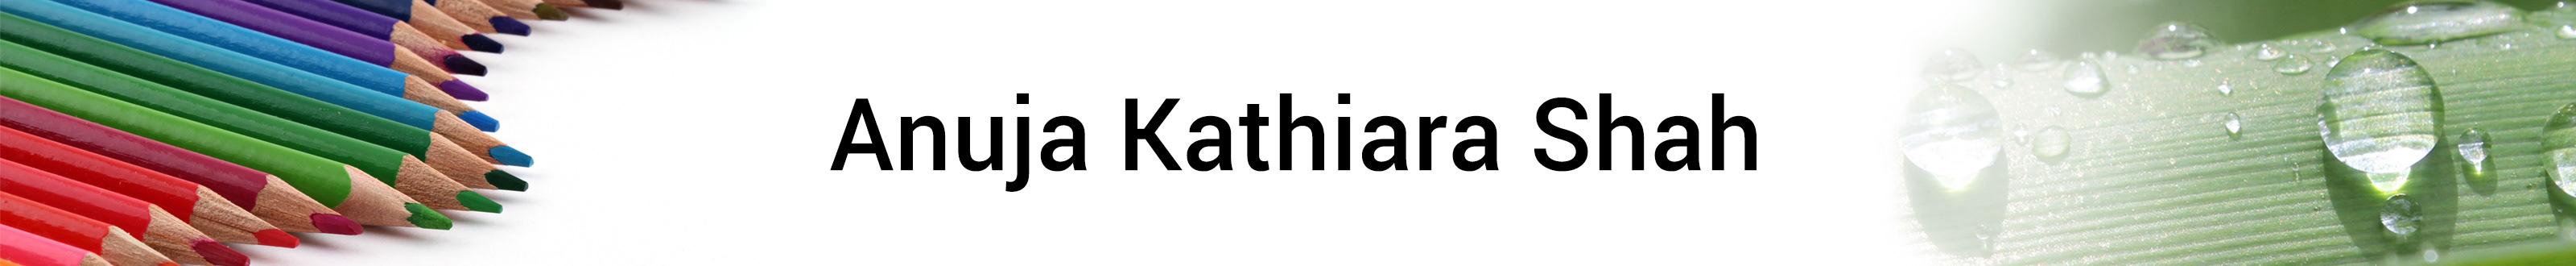 Anuja Kathiara Shah's profile banner